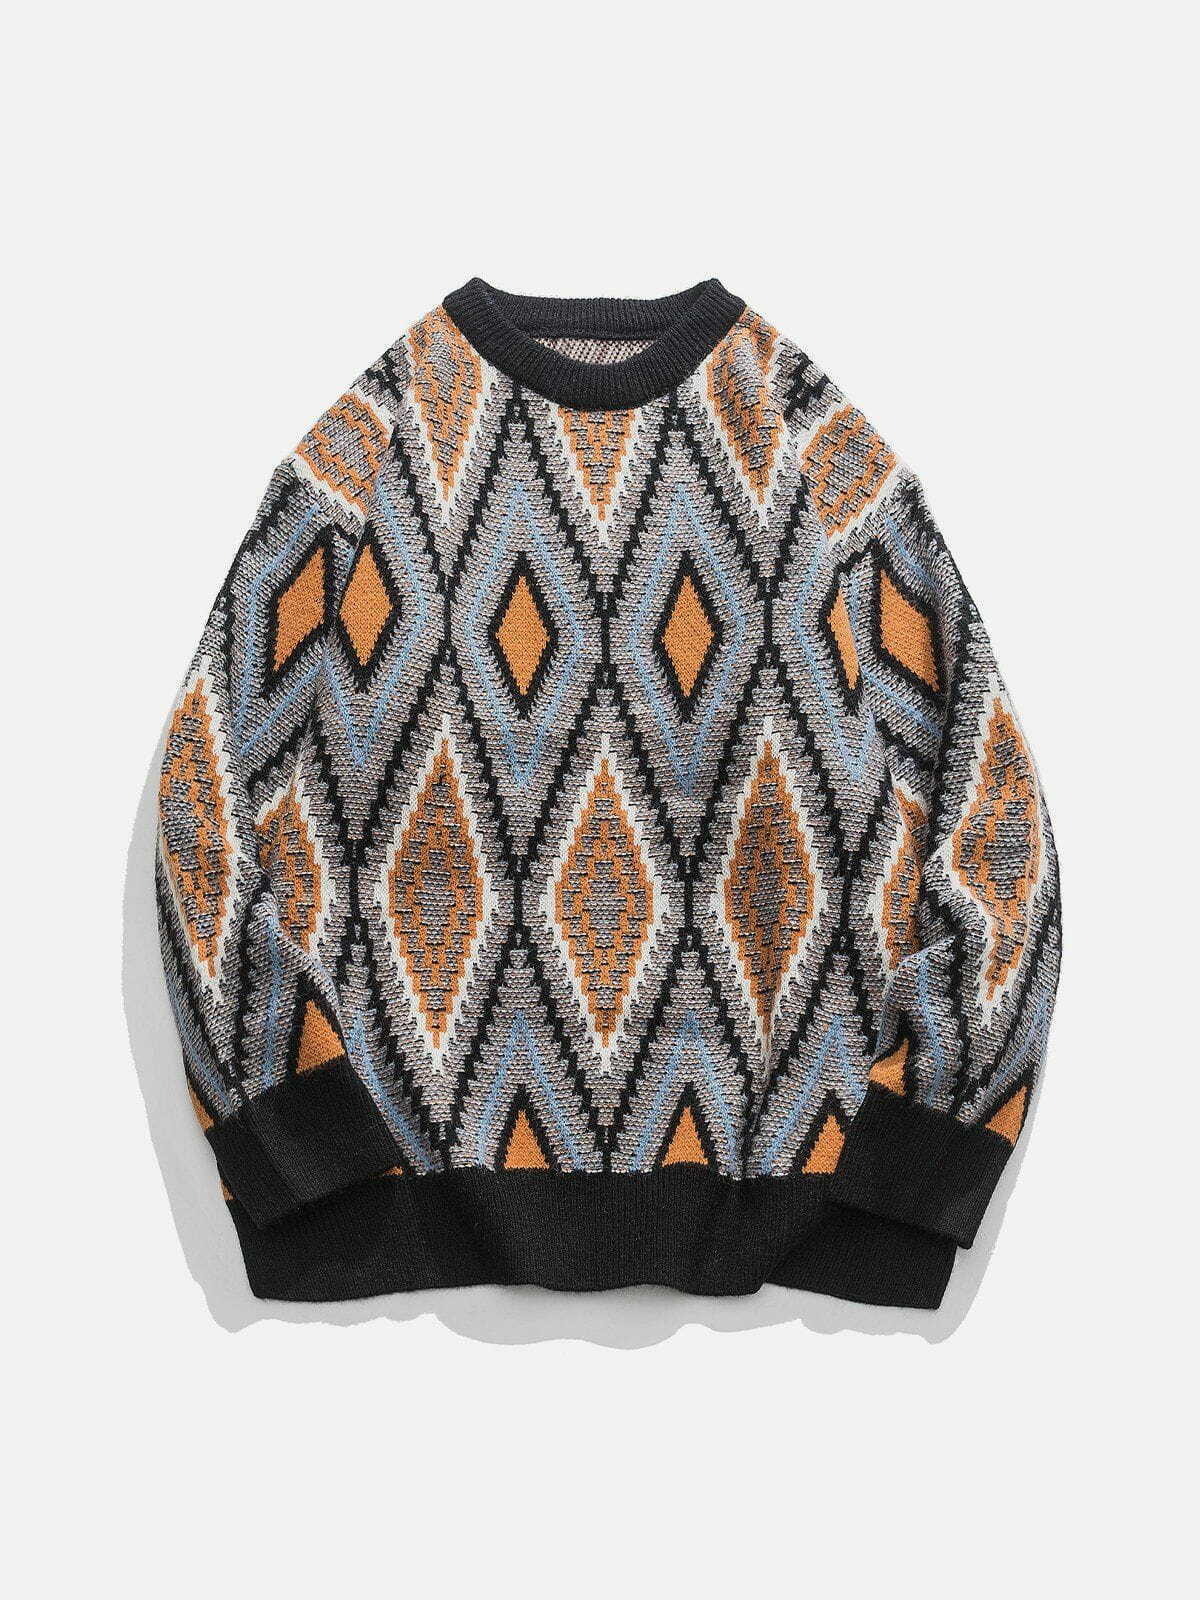 ethnic rhombus sweater   chic & youthful streetwear look 5467